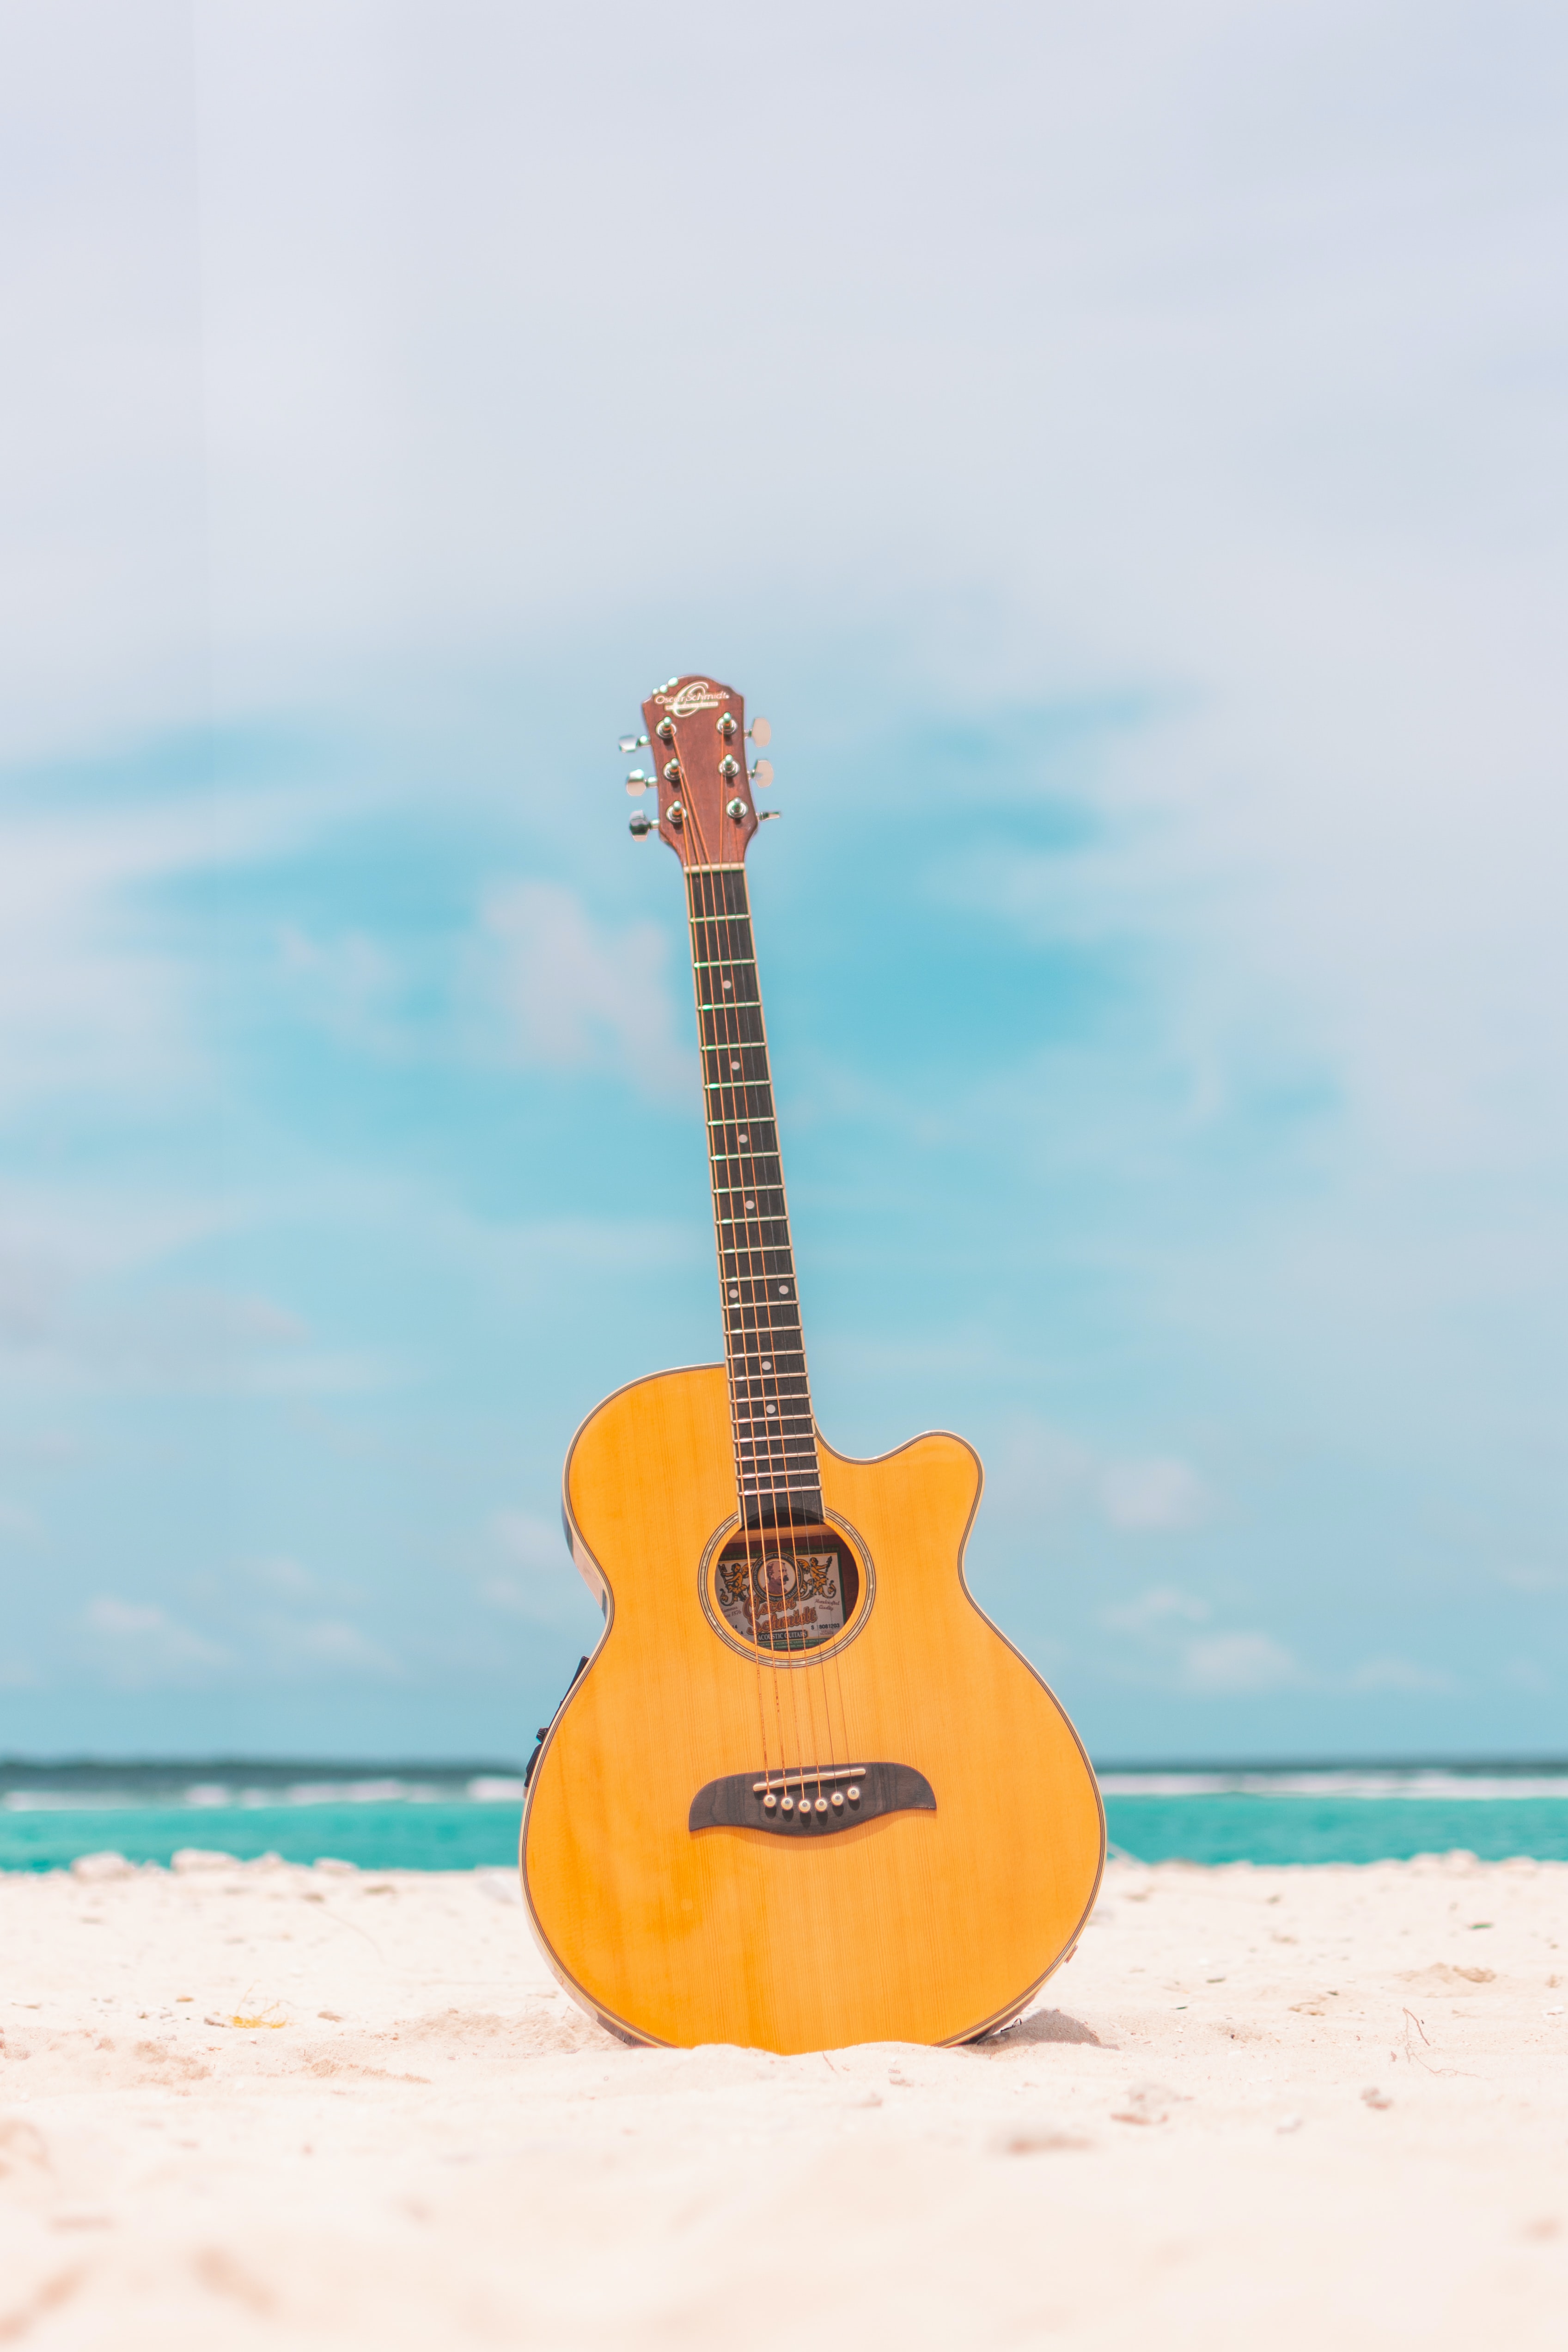 guitar, acoustic guitar, music, beach, summer, tool